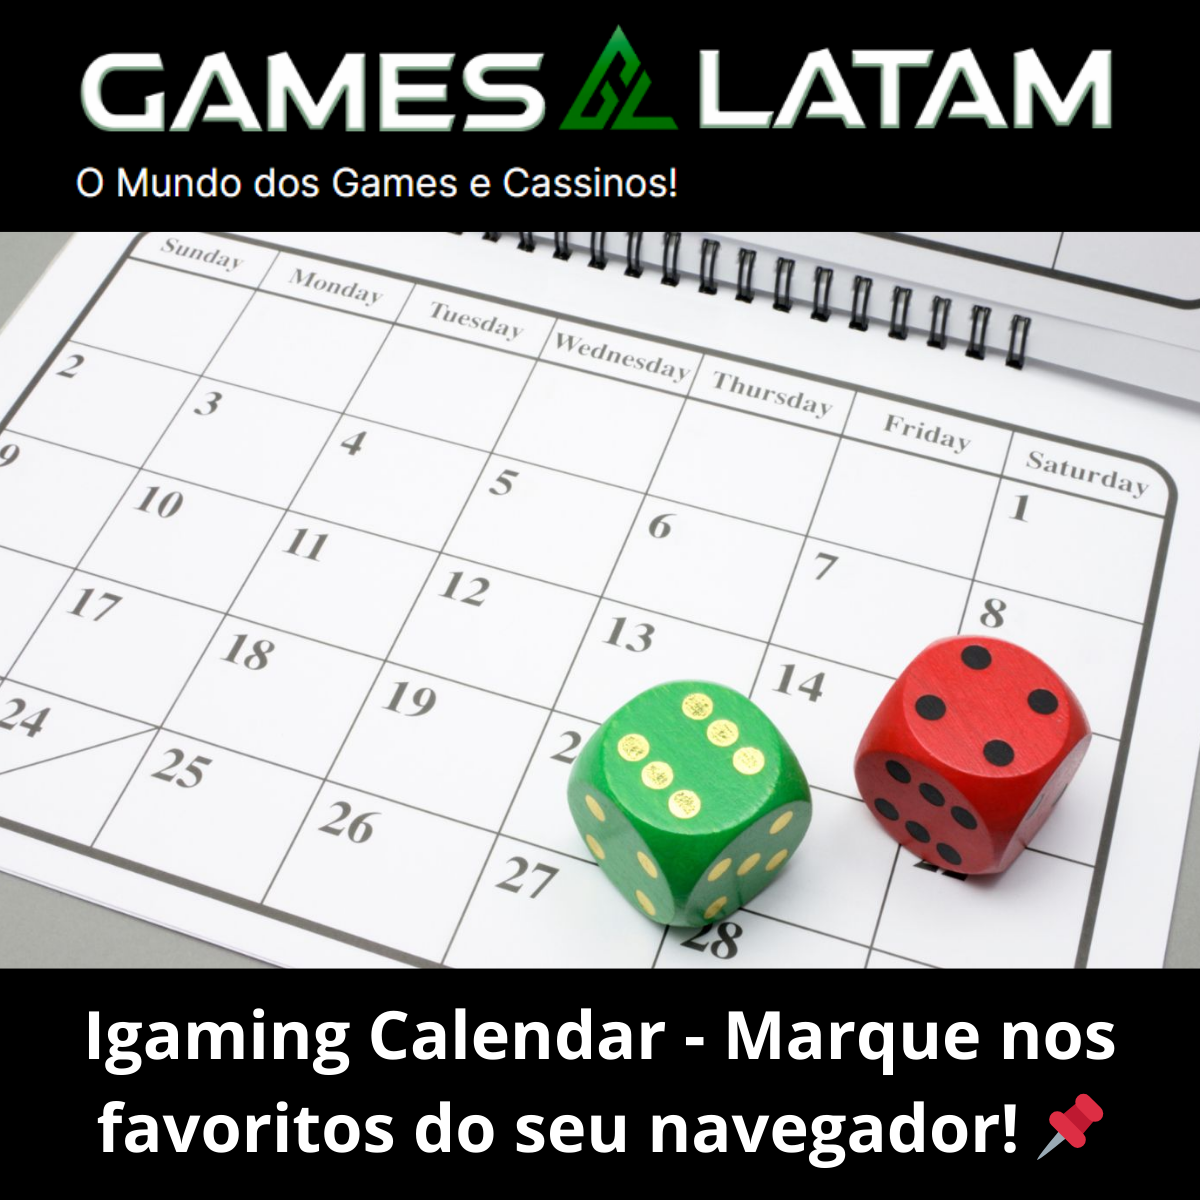 igaming calendar games latam